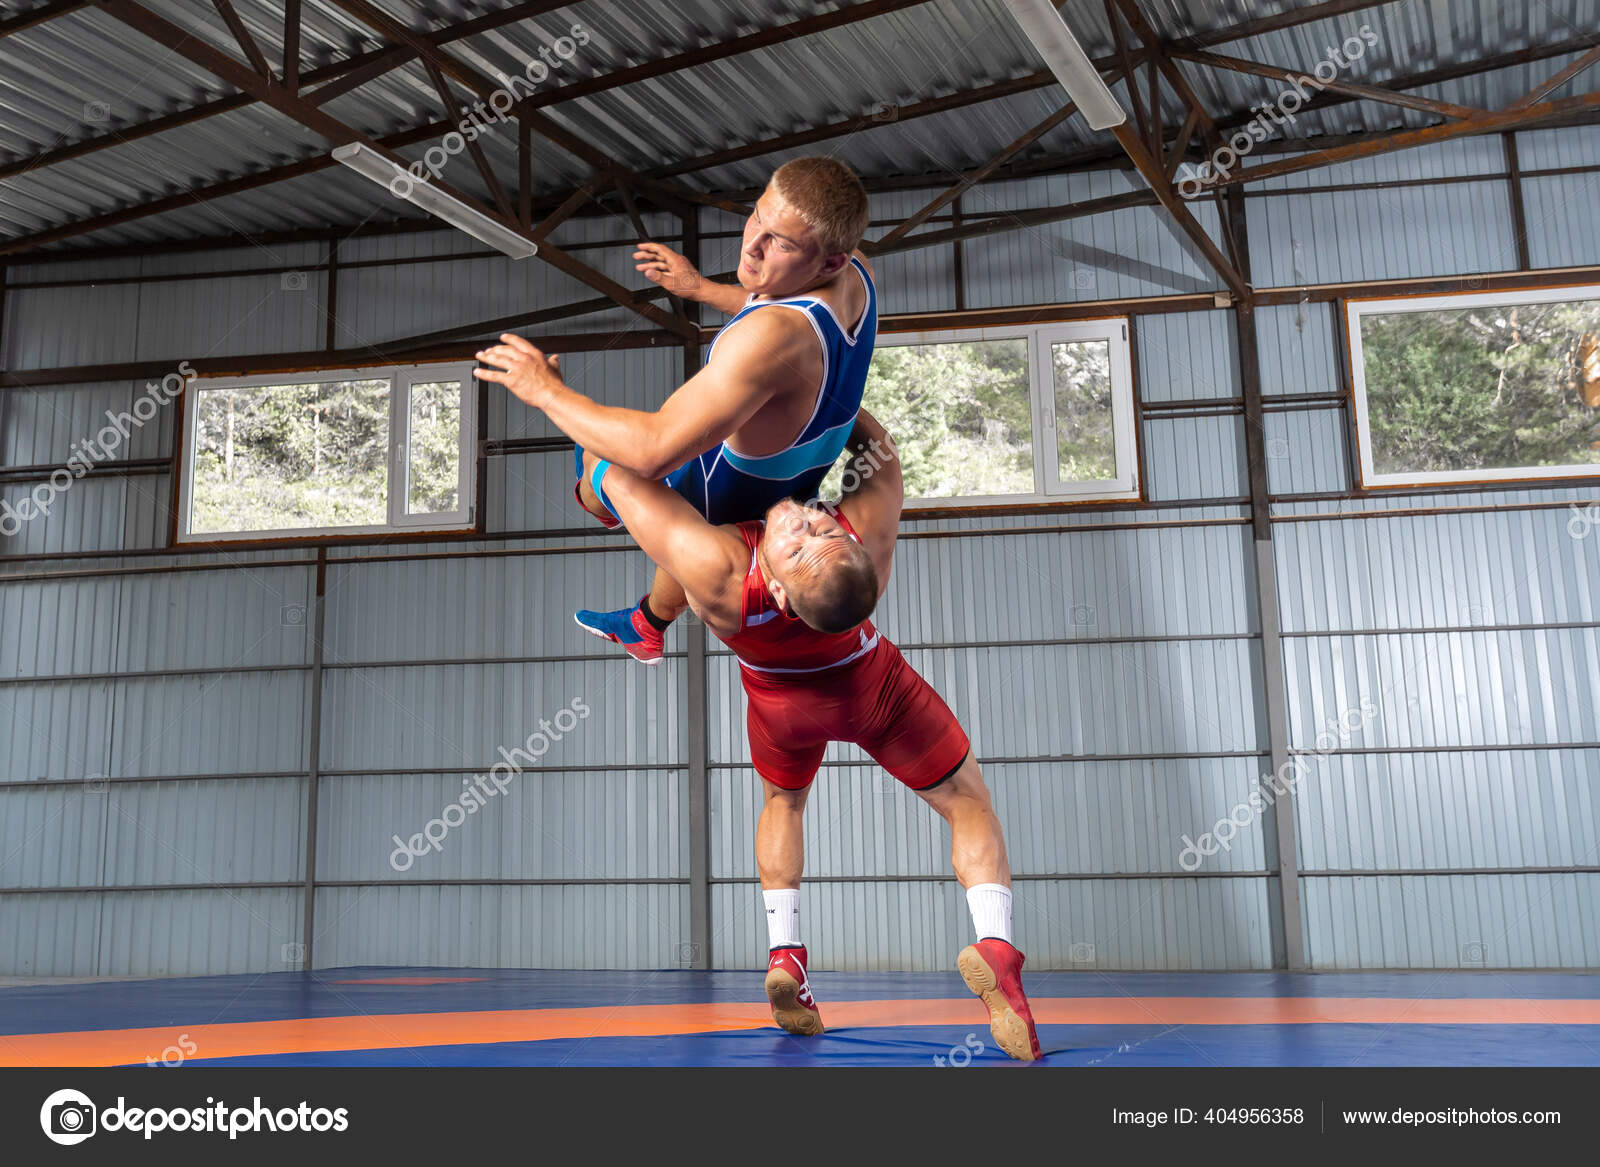 https://st4.depositphotos.com/11618586/40495/i/1600/depositphotos_404956358-stock-photo-two-men-sports-wrestling-tights.jpg